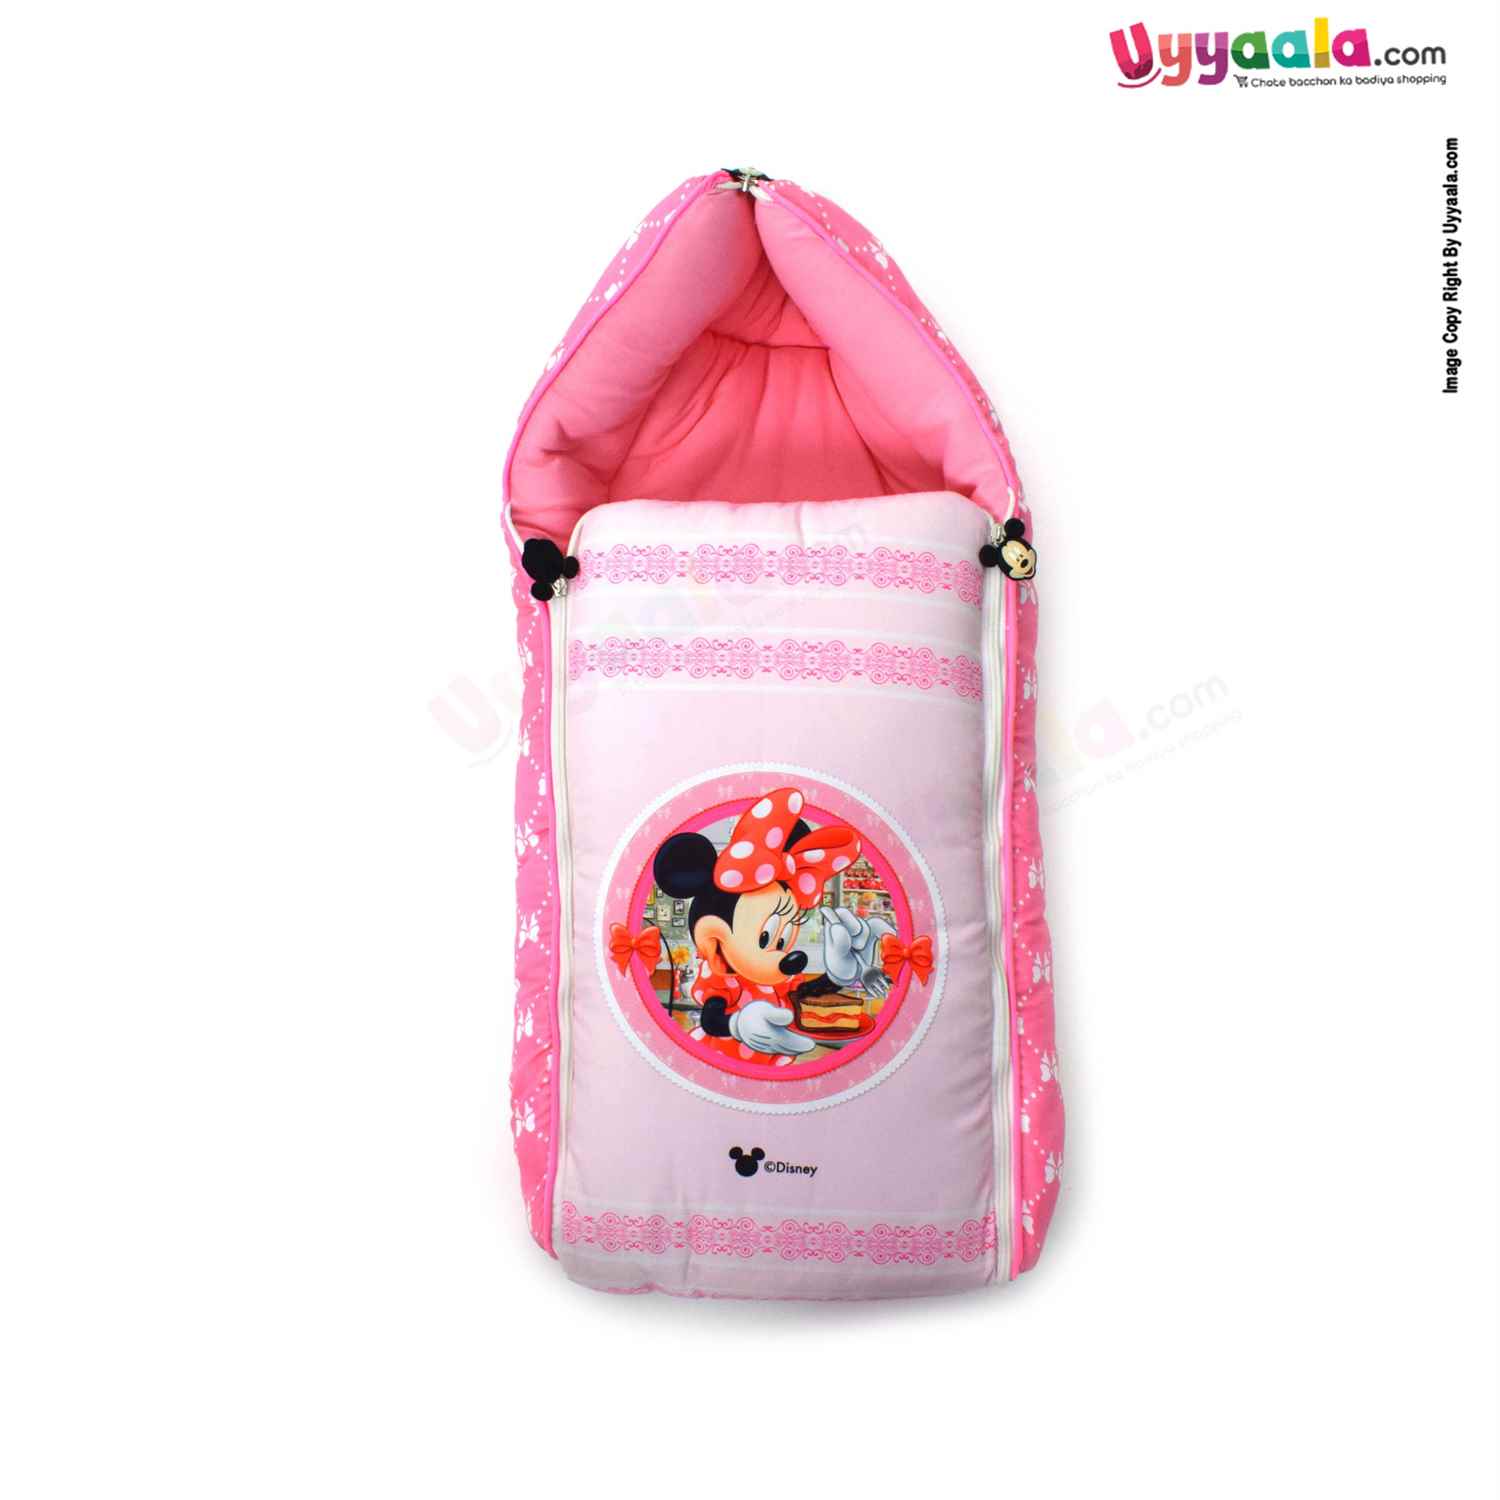 DISNEY Baby Carry Nest (Sleeping Bag) Cotton Disney Print 0+m Age, Pink